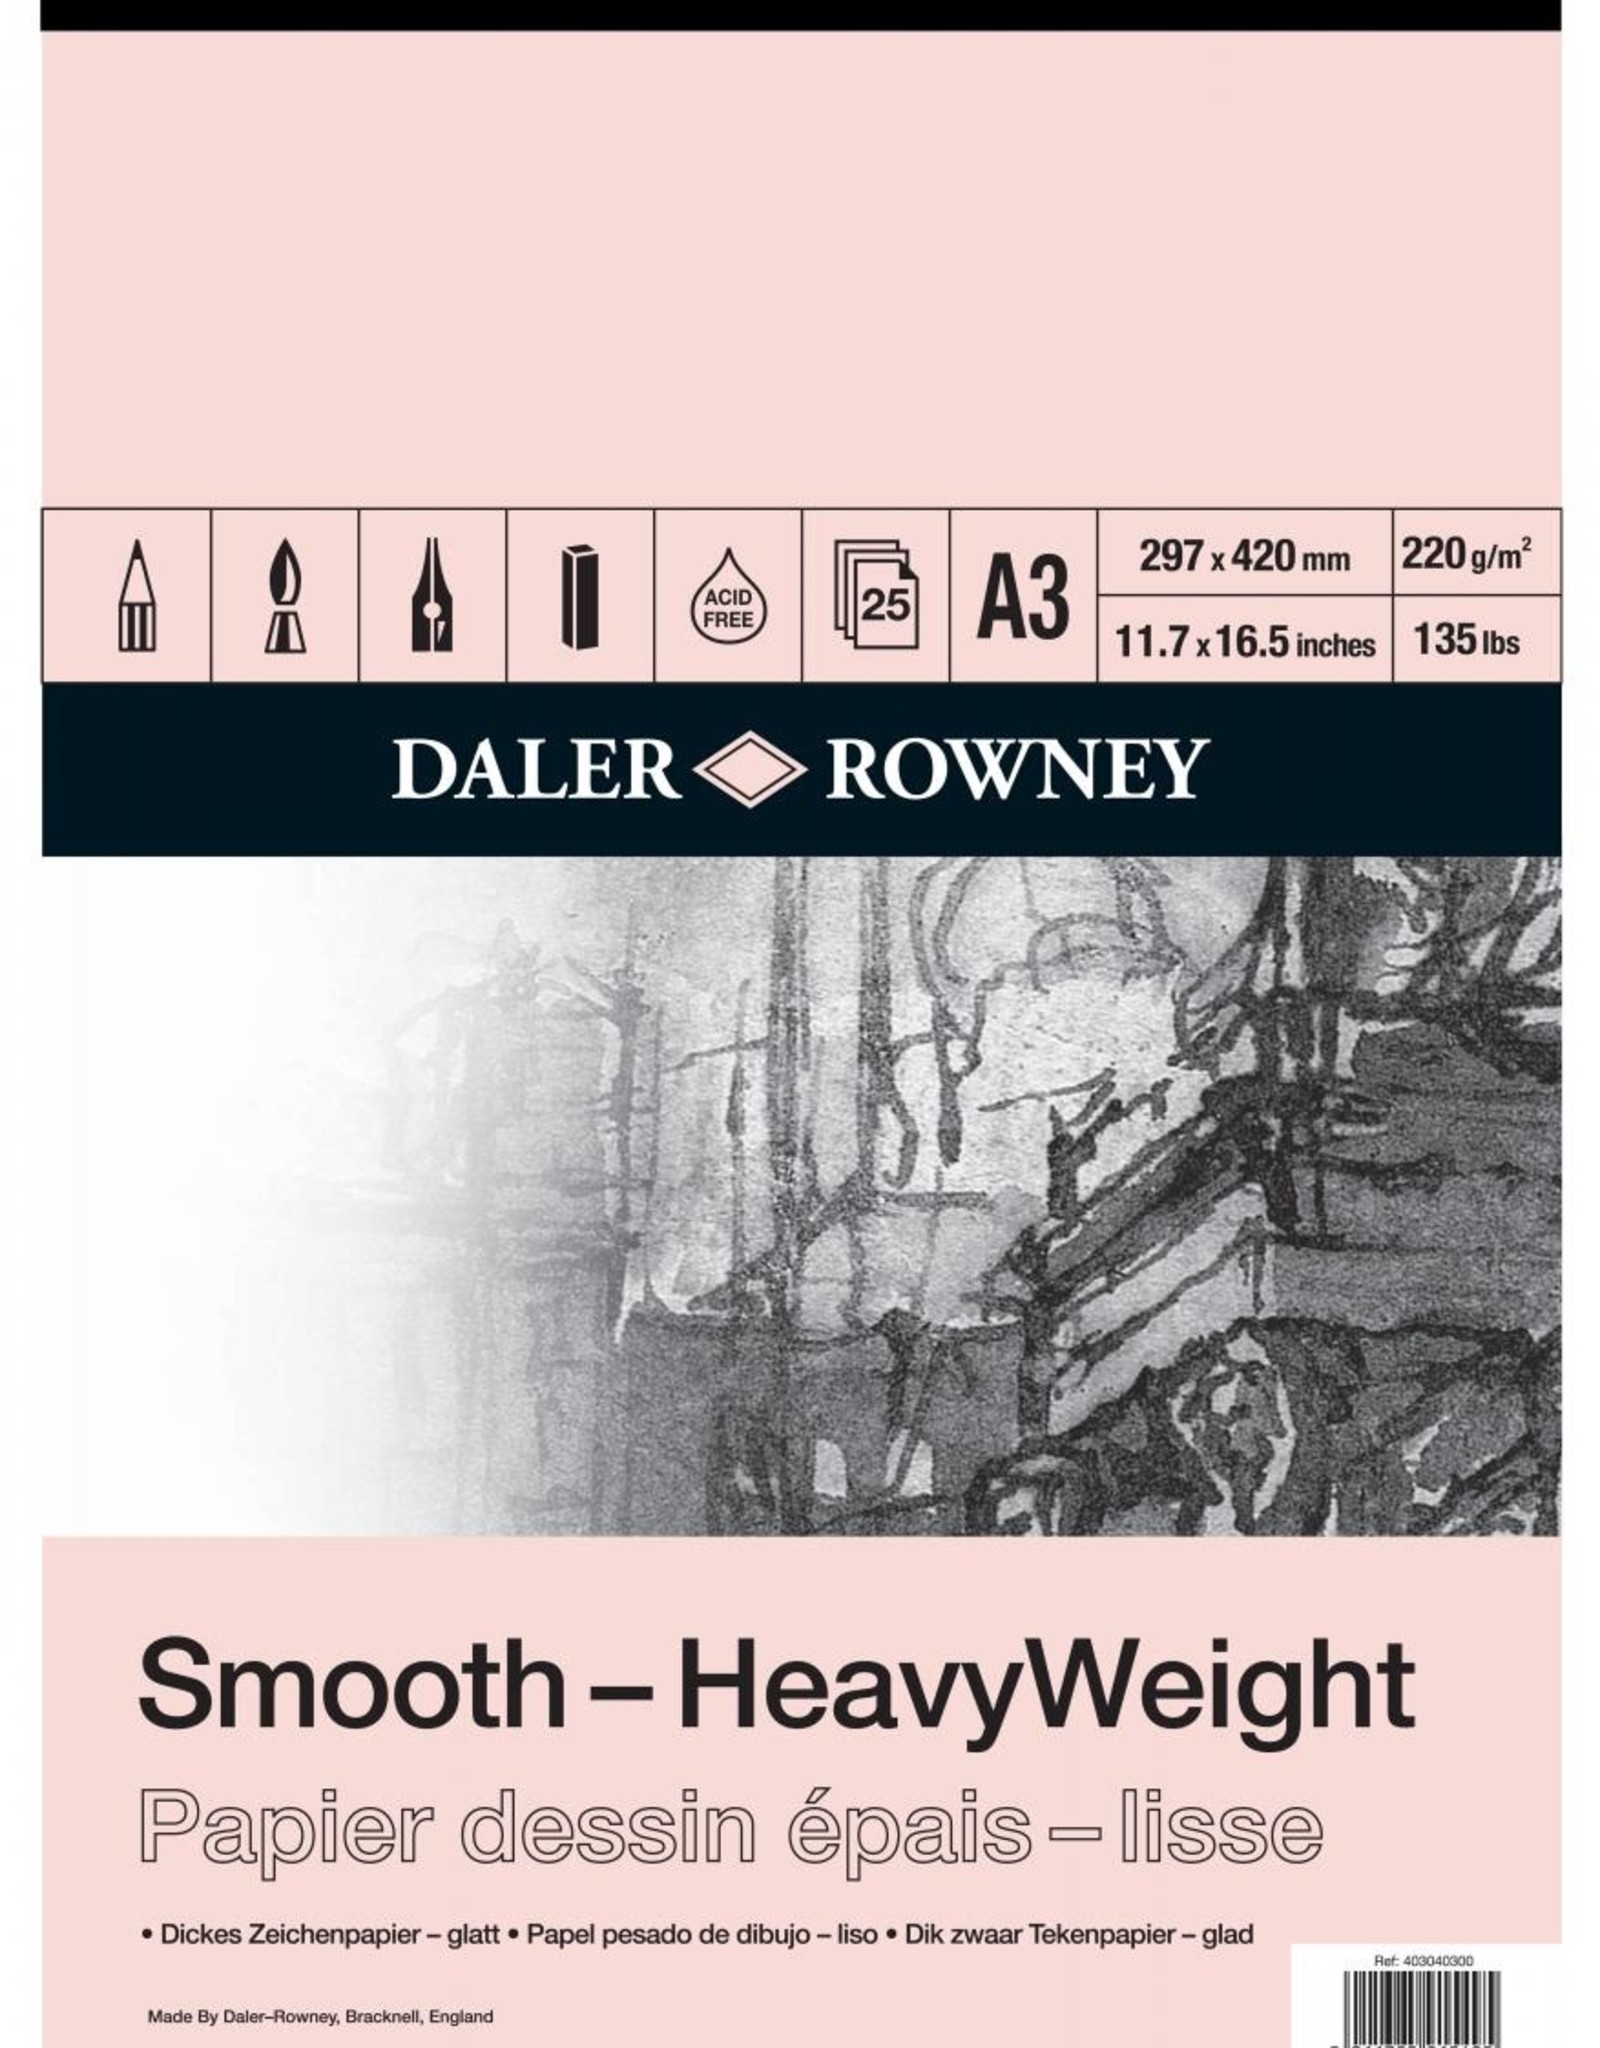 Daler-Rowney Blok Tekenpapier A4 Daler-Rowney Glad Heavy Weight Smooth 220 grs 25 vel - Copy